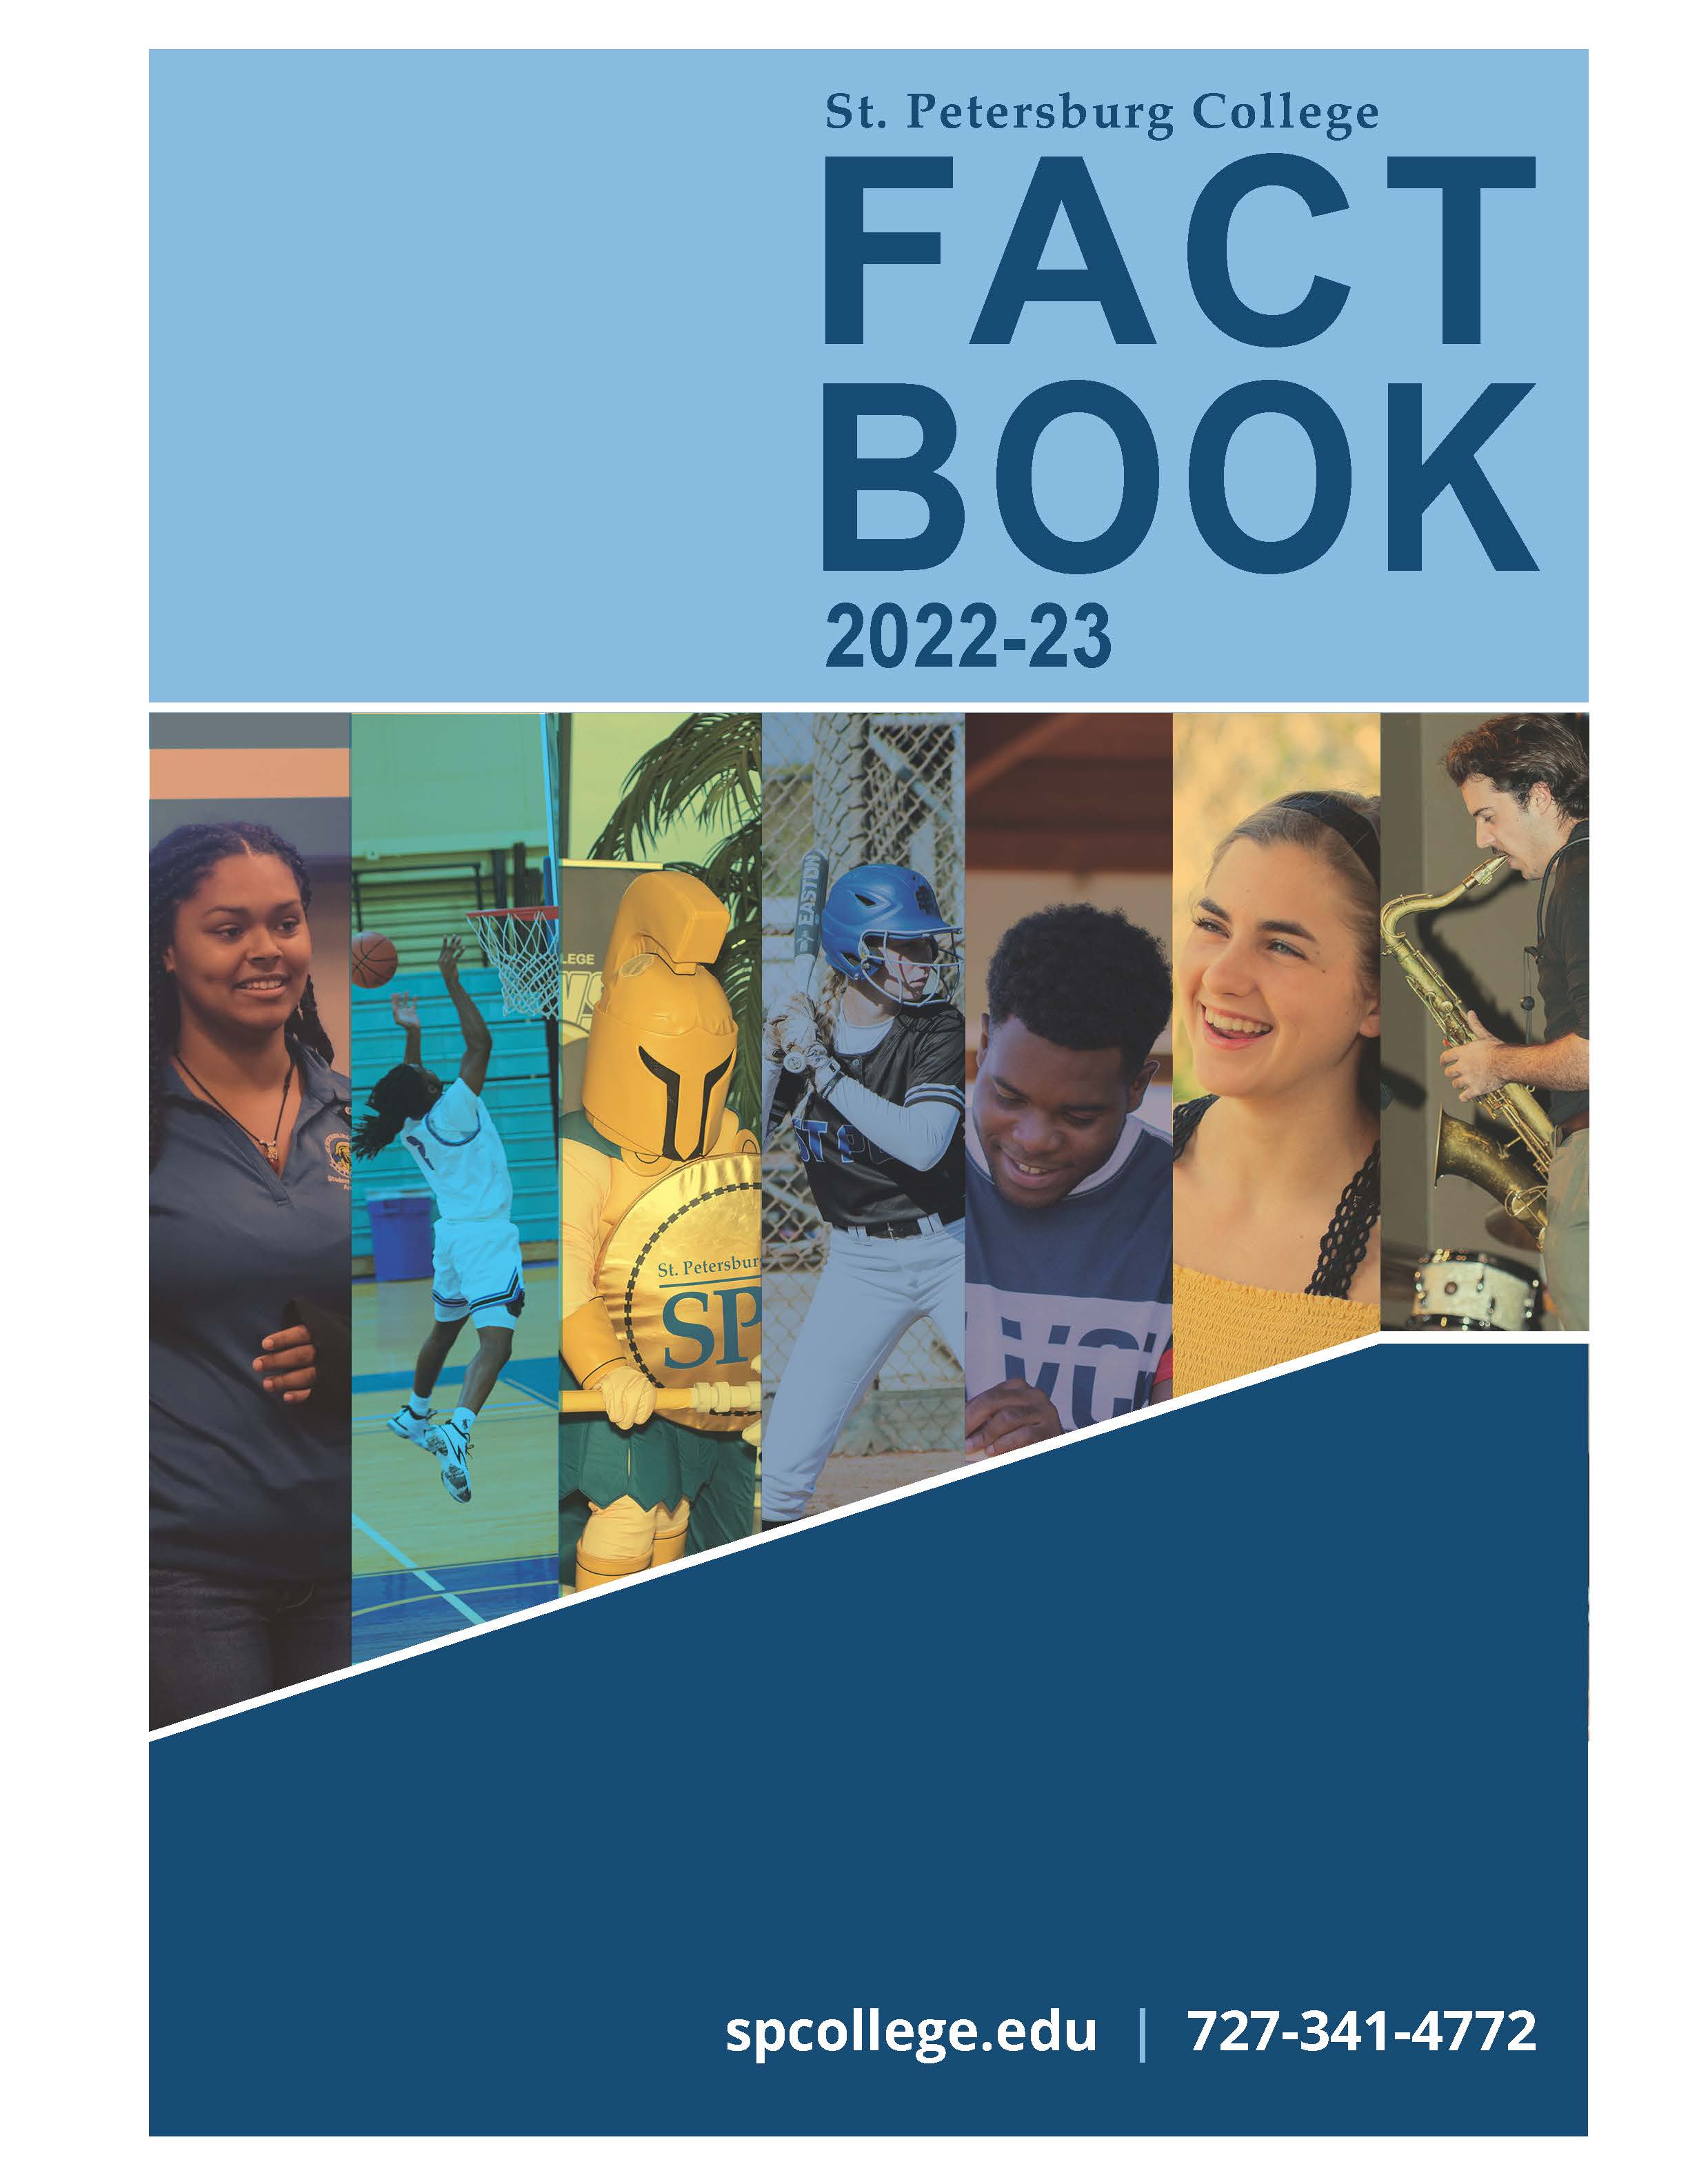 SPC 2020-21 Factbook Cover